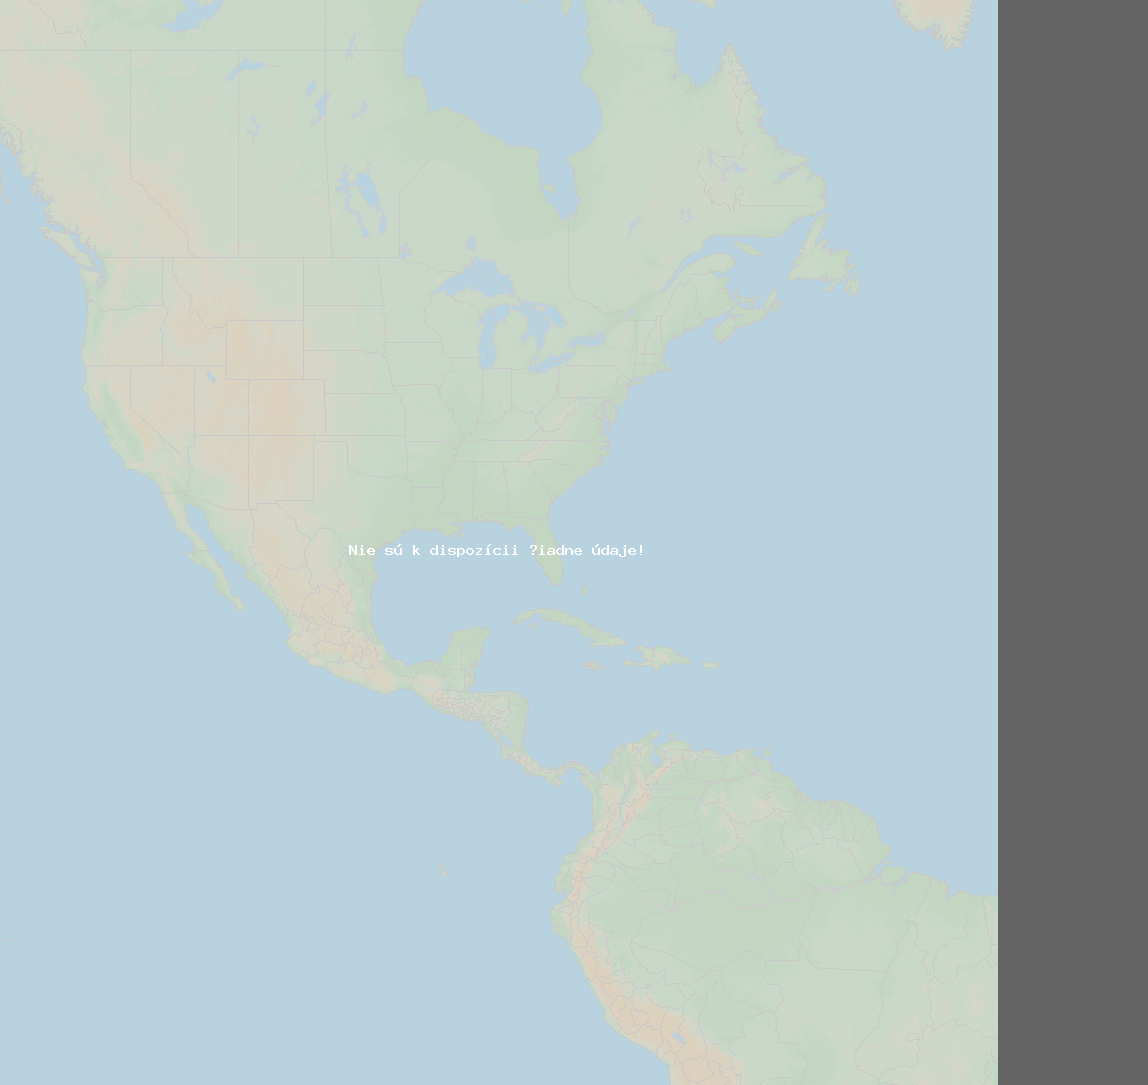 Pomer bleskov (Stanica Bobcaygeon) North America 2020 